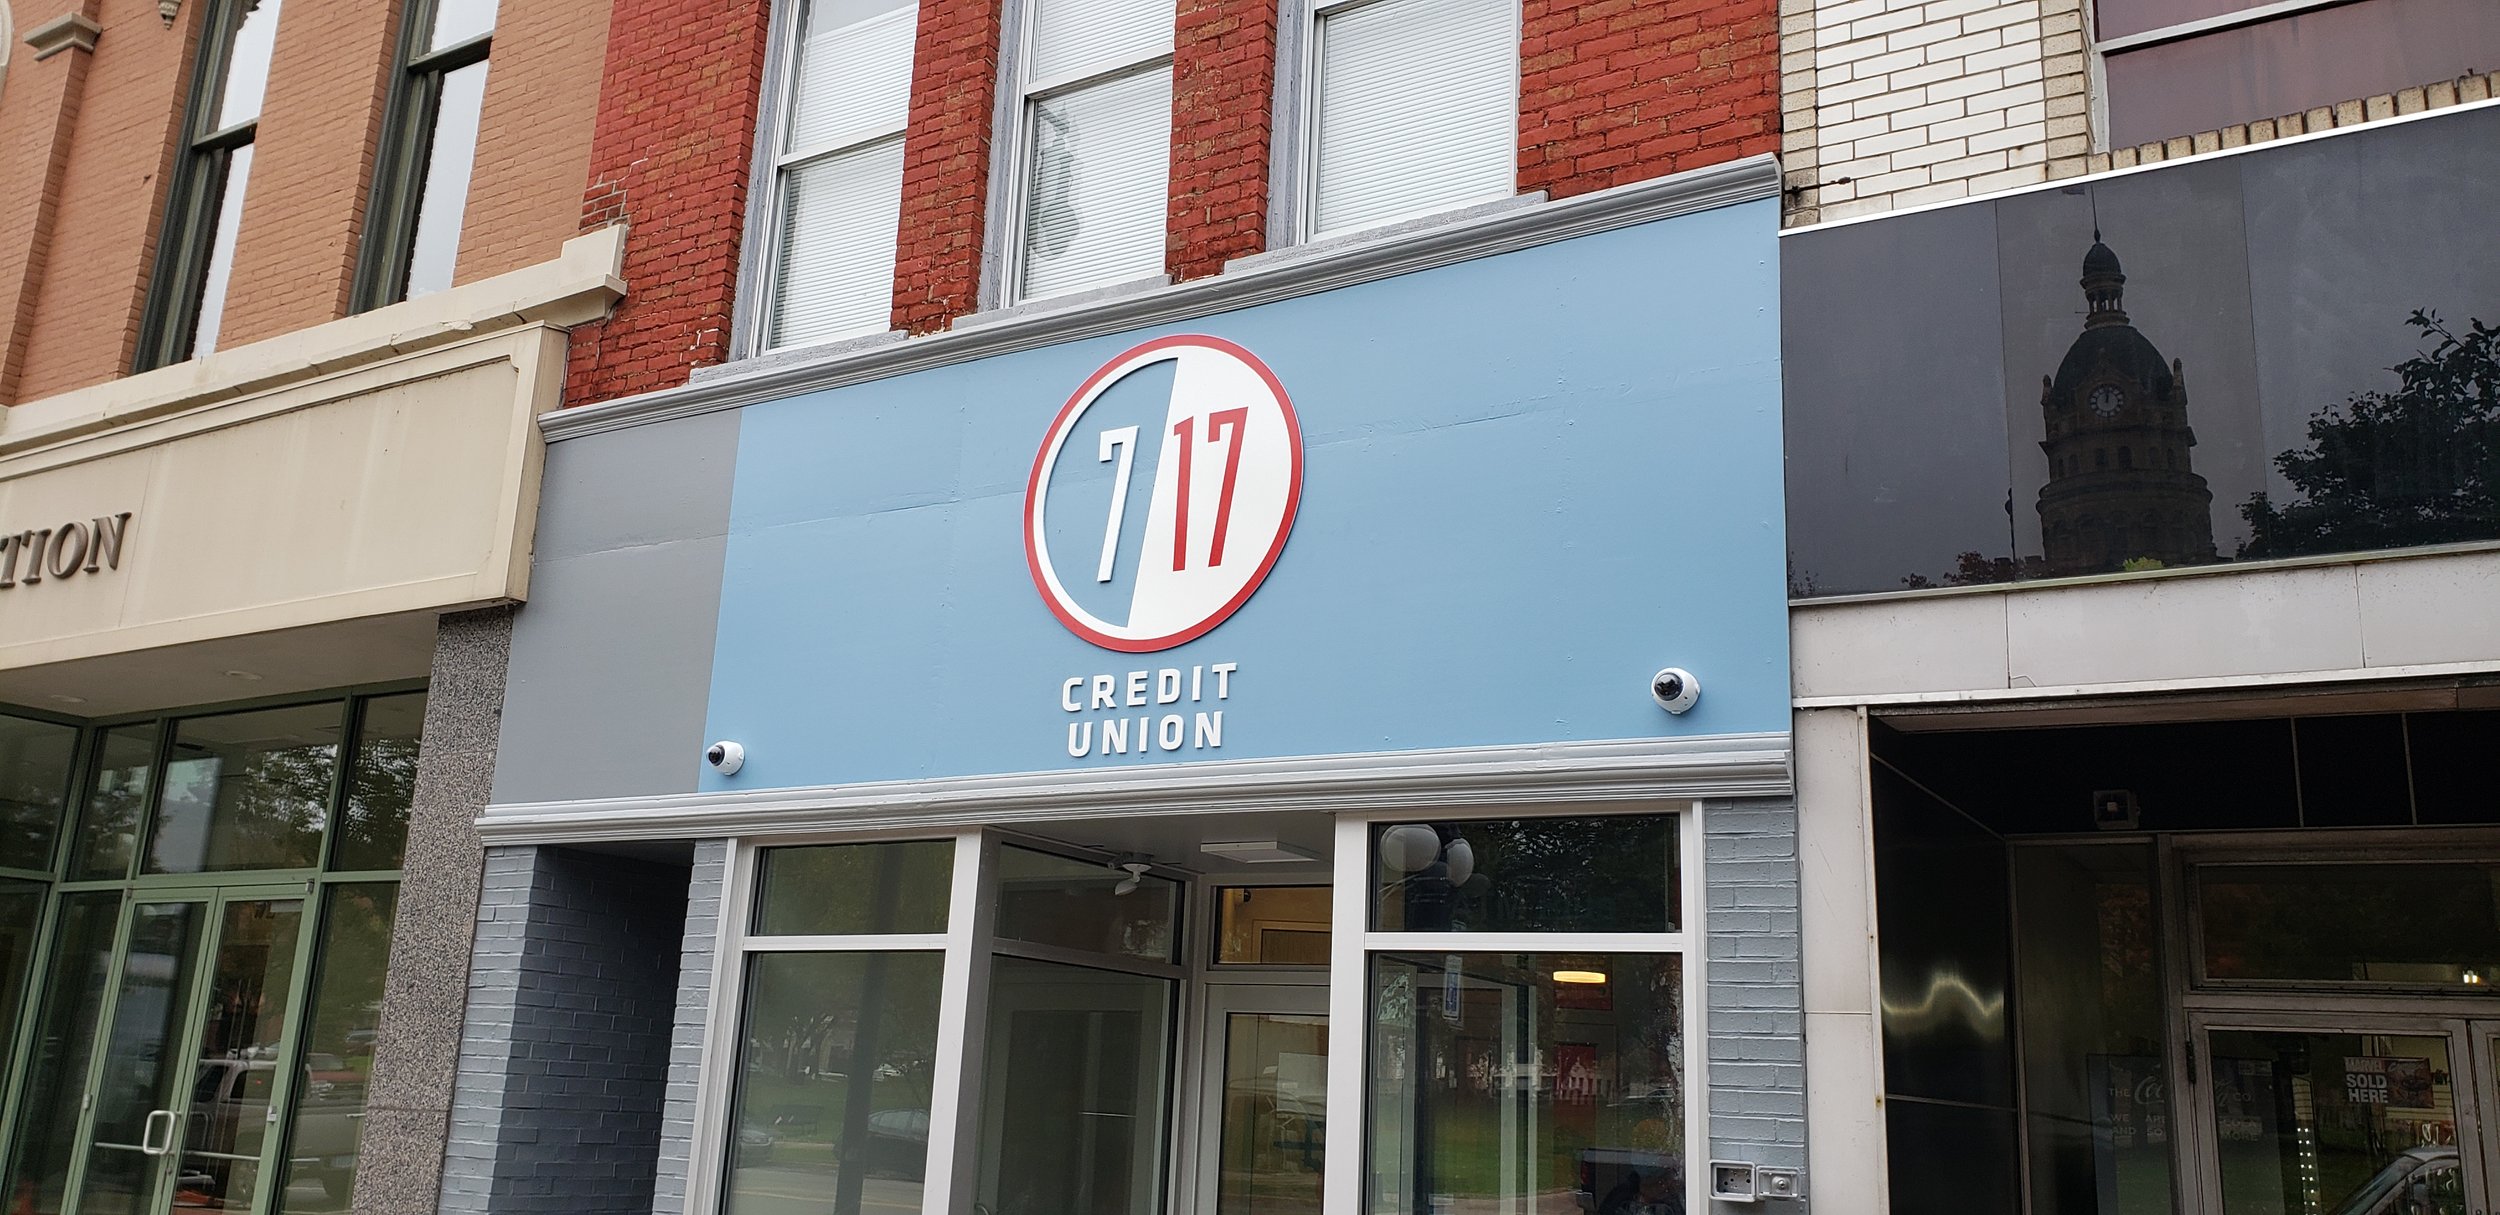 7 17 Credit Union Acrylic Logo